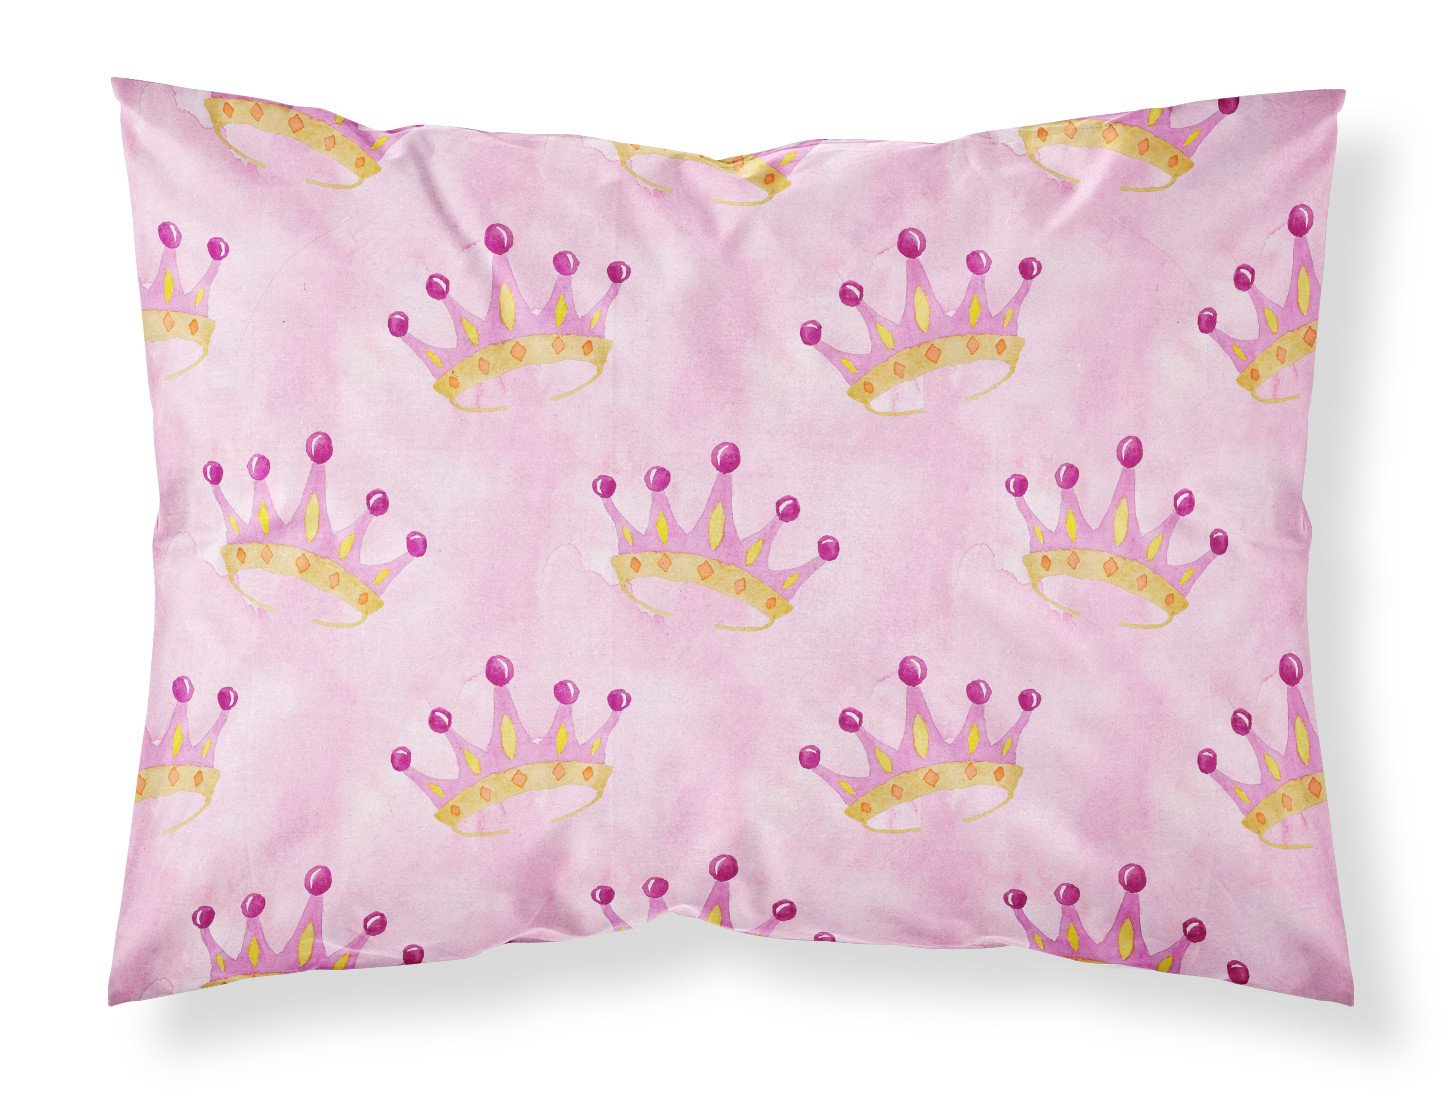 Watercolor Princess Crown on Pink Fabric Standard Pillowcase BB7546PILLOWCASE by Caroline's Treasures